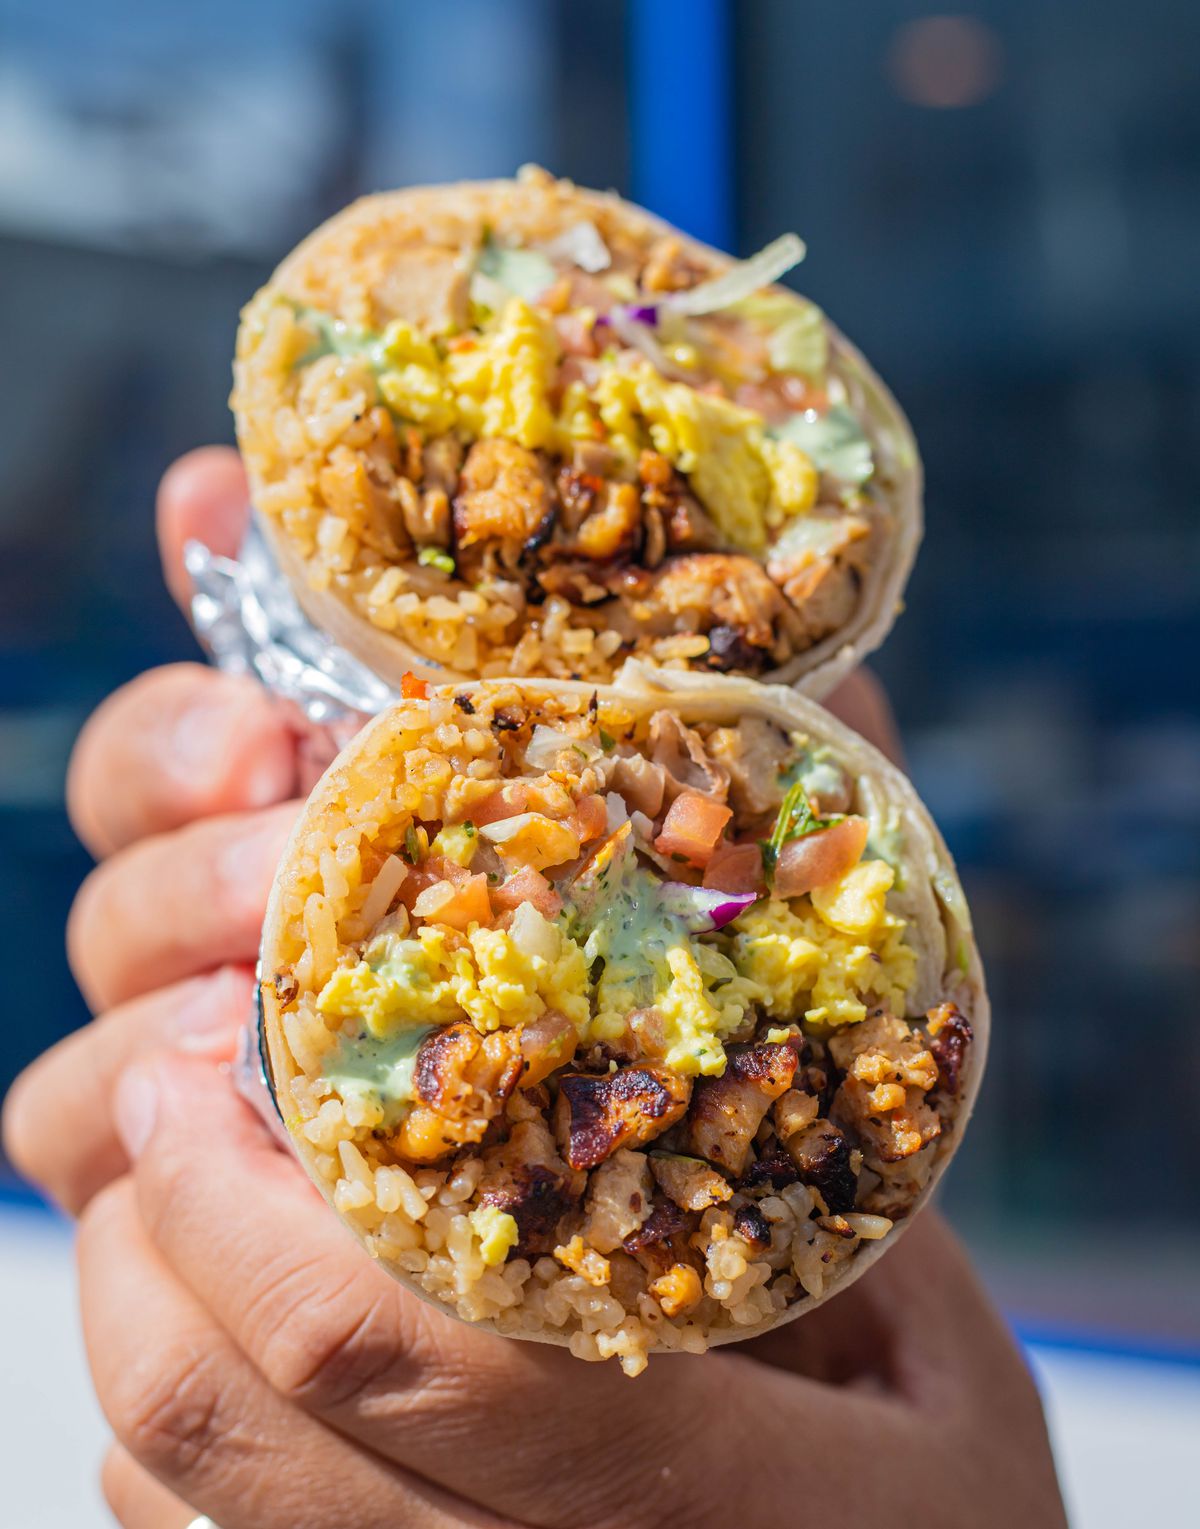 Two halves of a burrito stuffed with rice, pico de gallo, and vegan chicken.